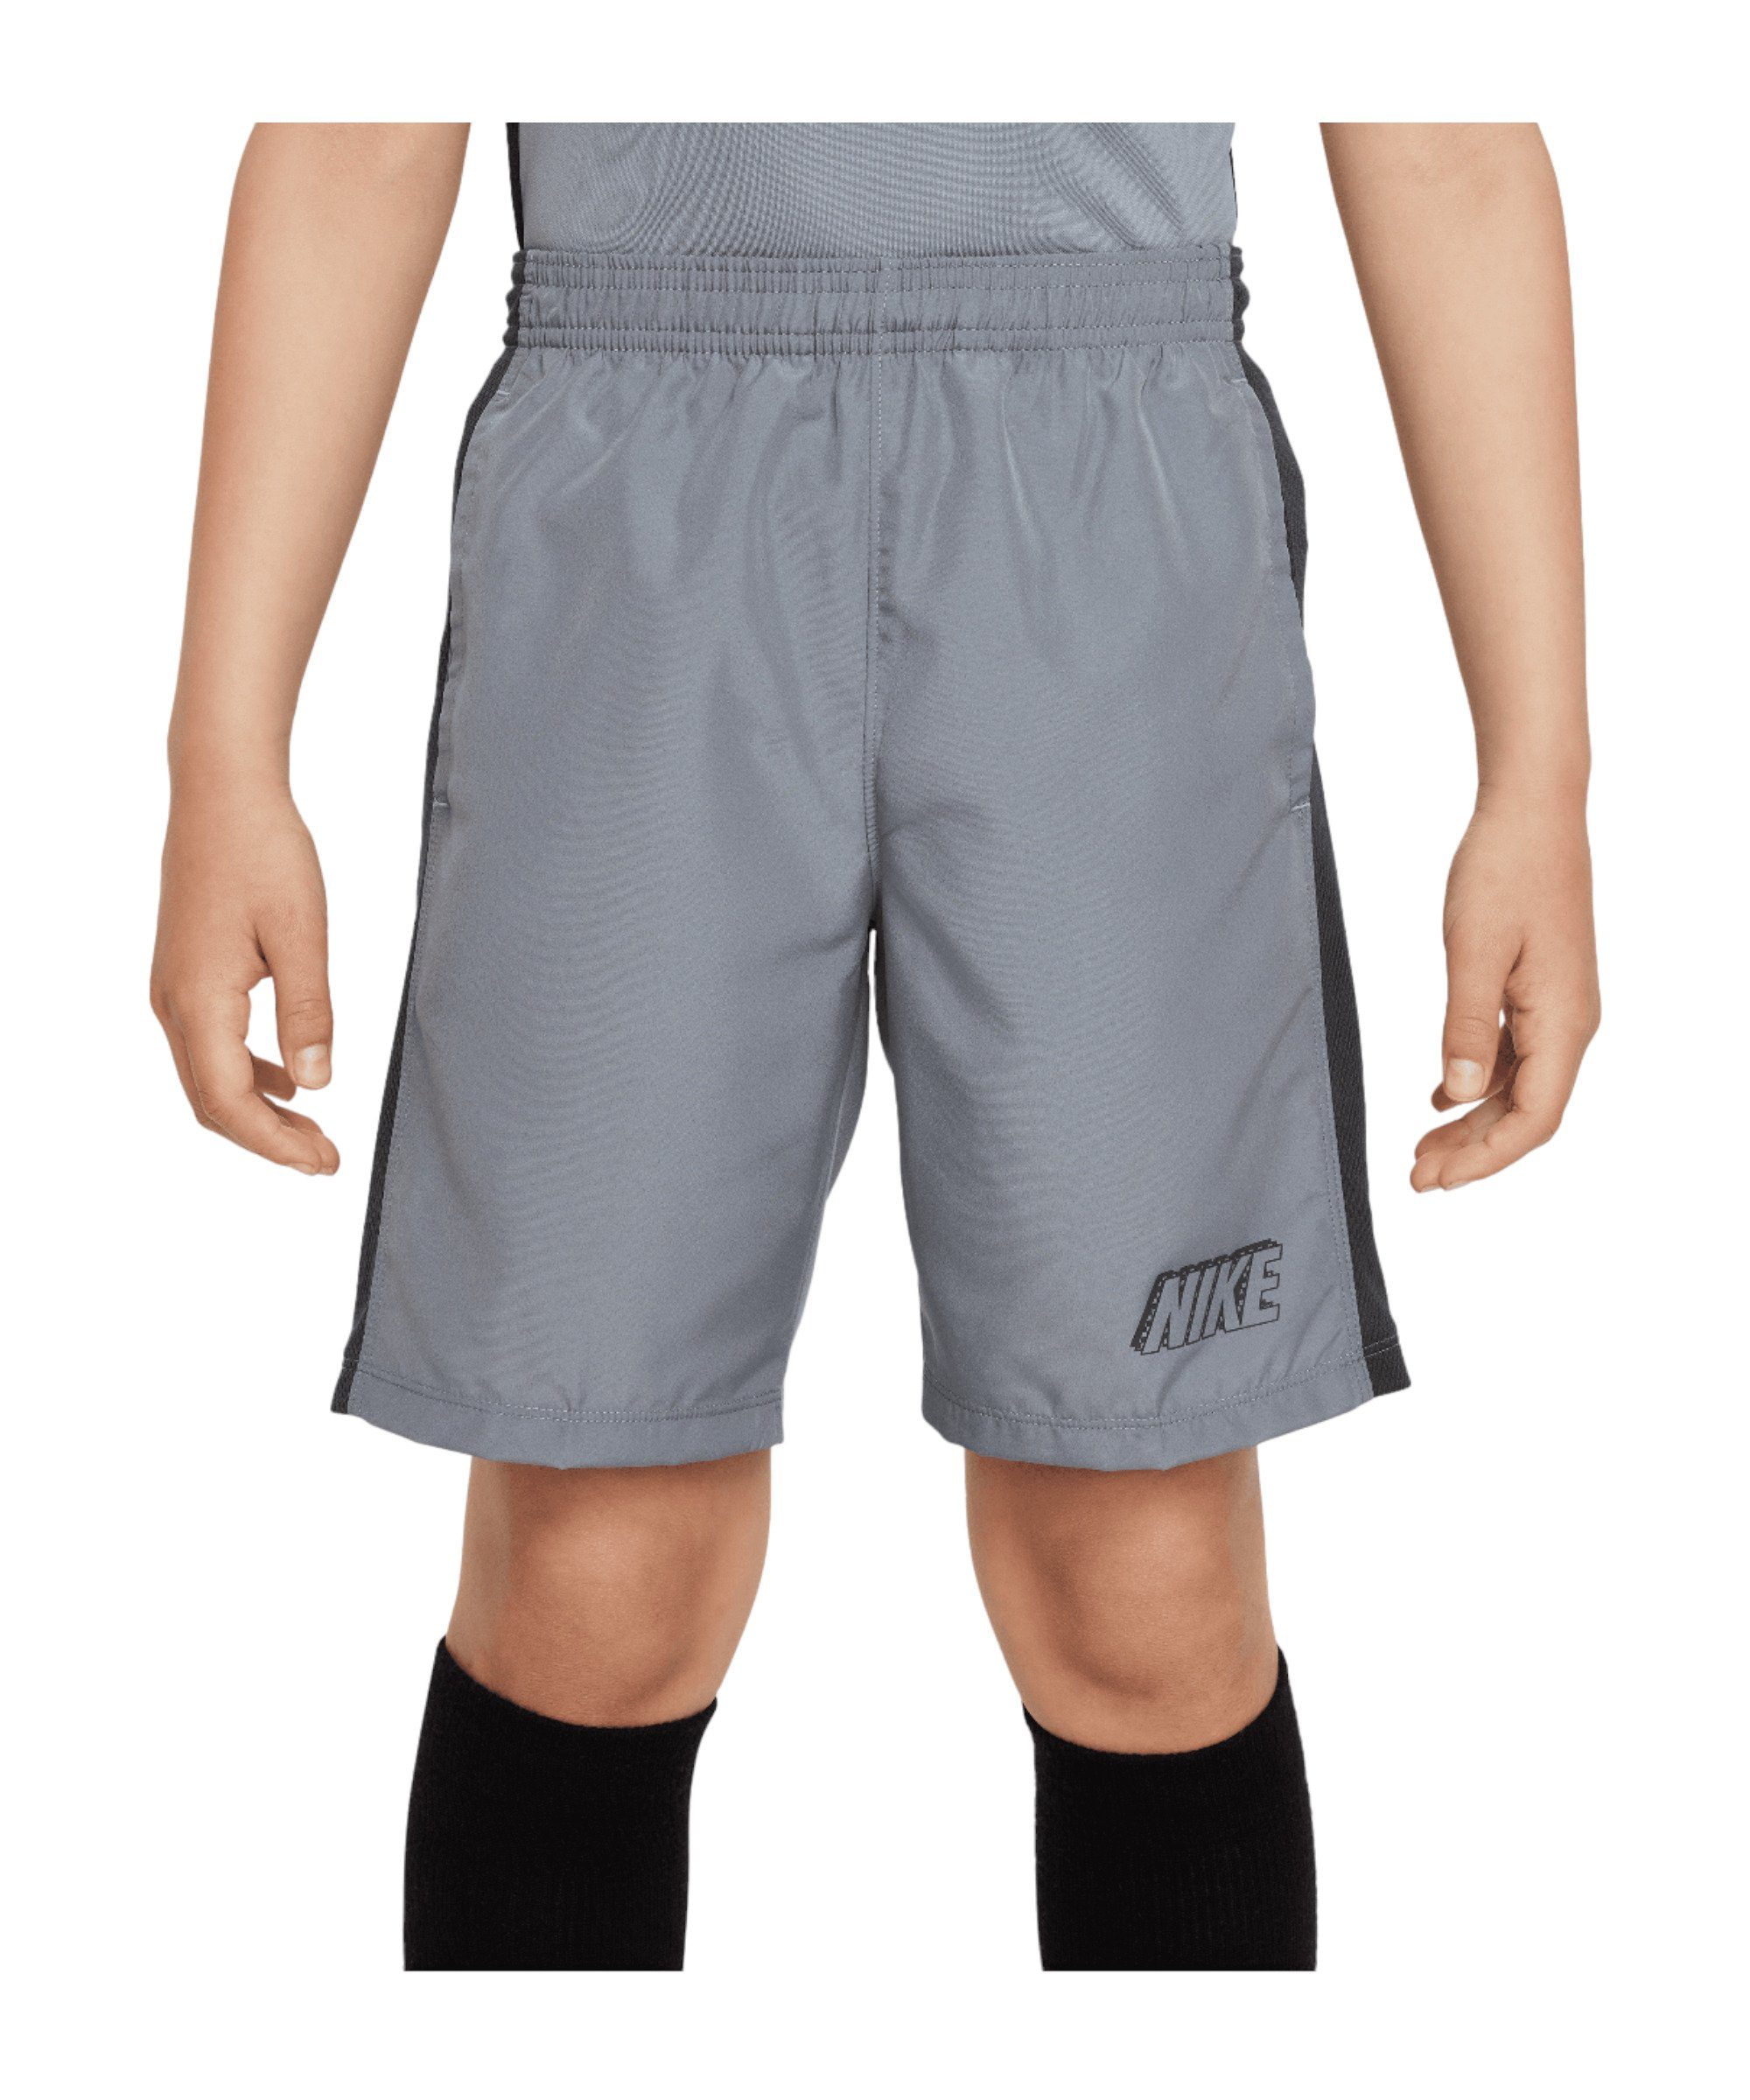 Academy Sporthose Kids 23 graugraugrau Nike Shorts